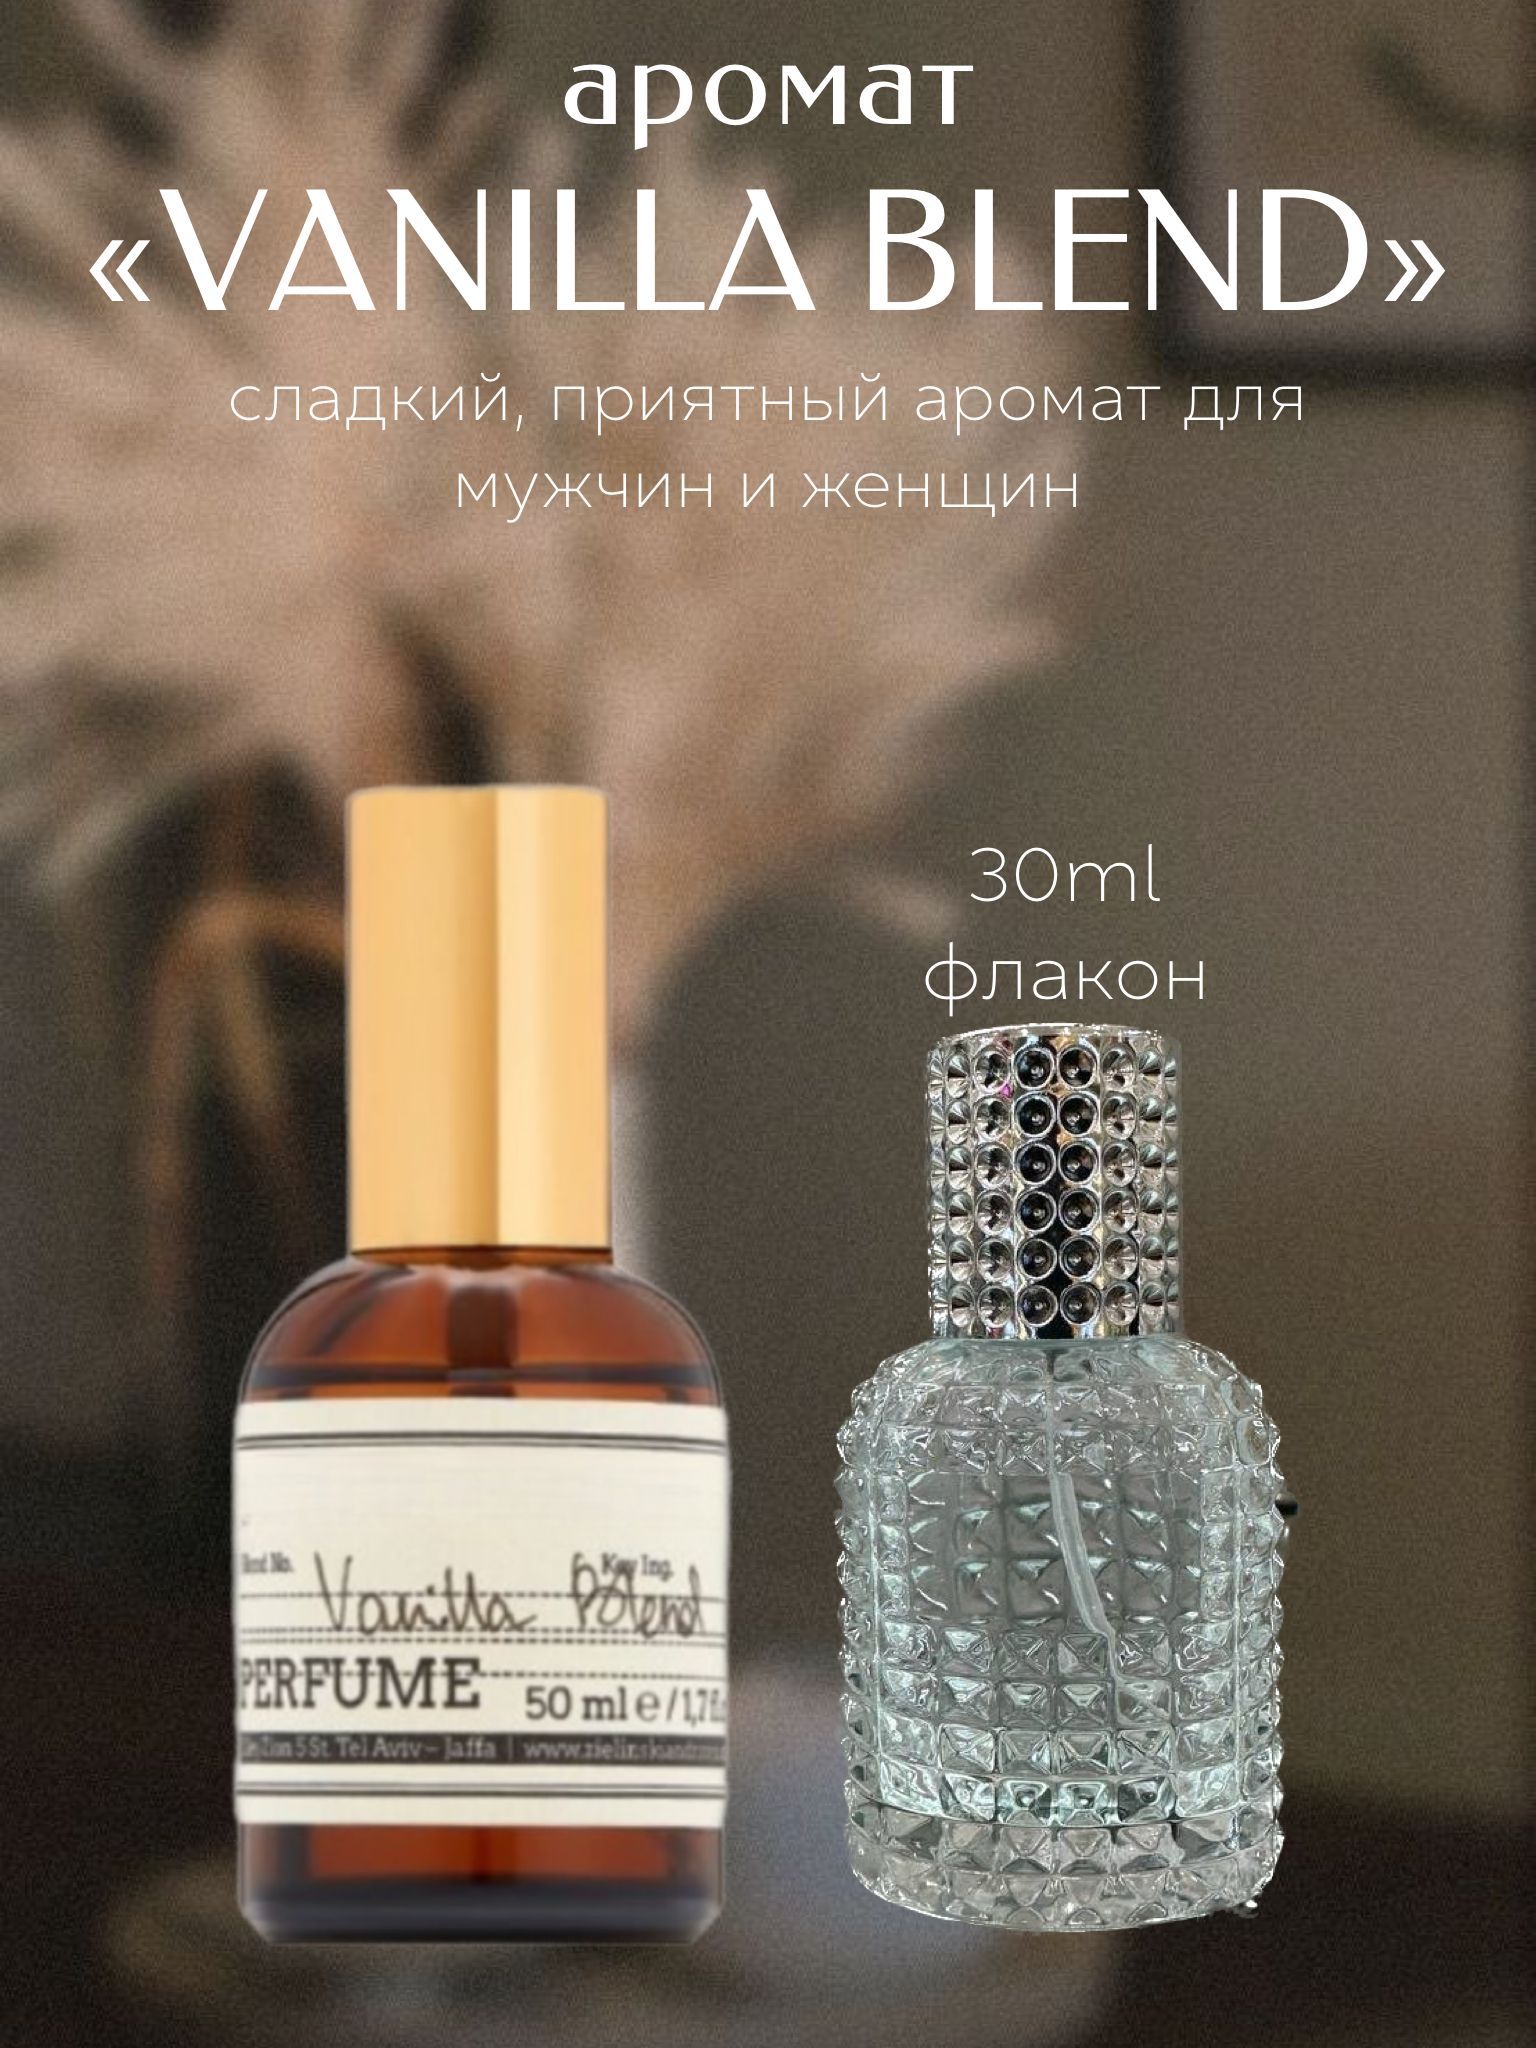 Ванила Бленд. Vanilla Blend туалетная вода. Vanilla Blend духи описание. Zilencki духи Vanilla Blend.